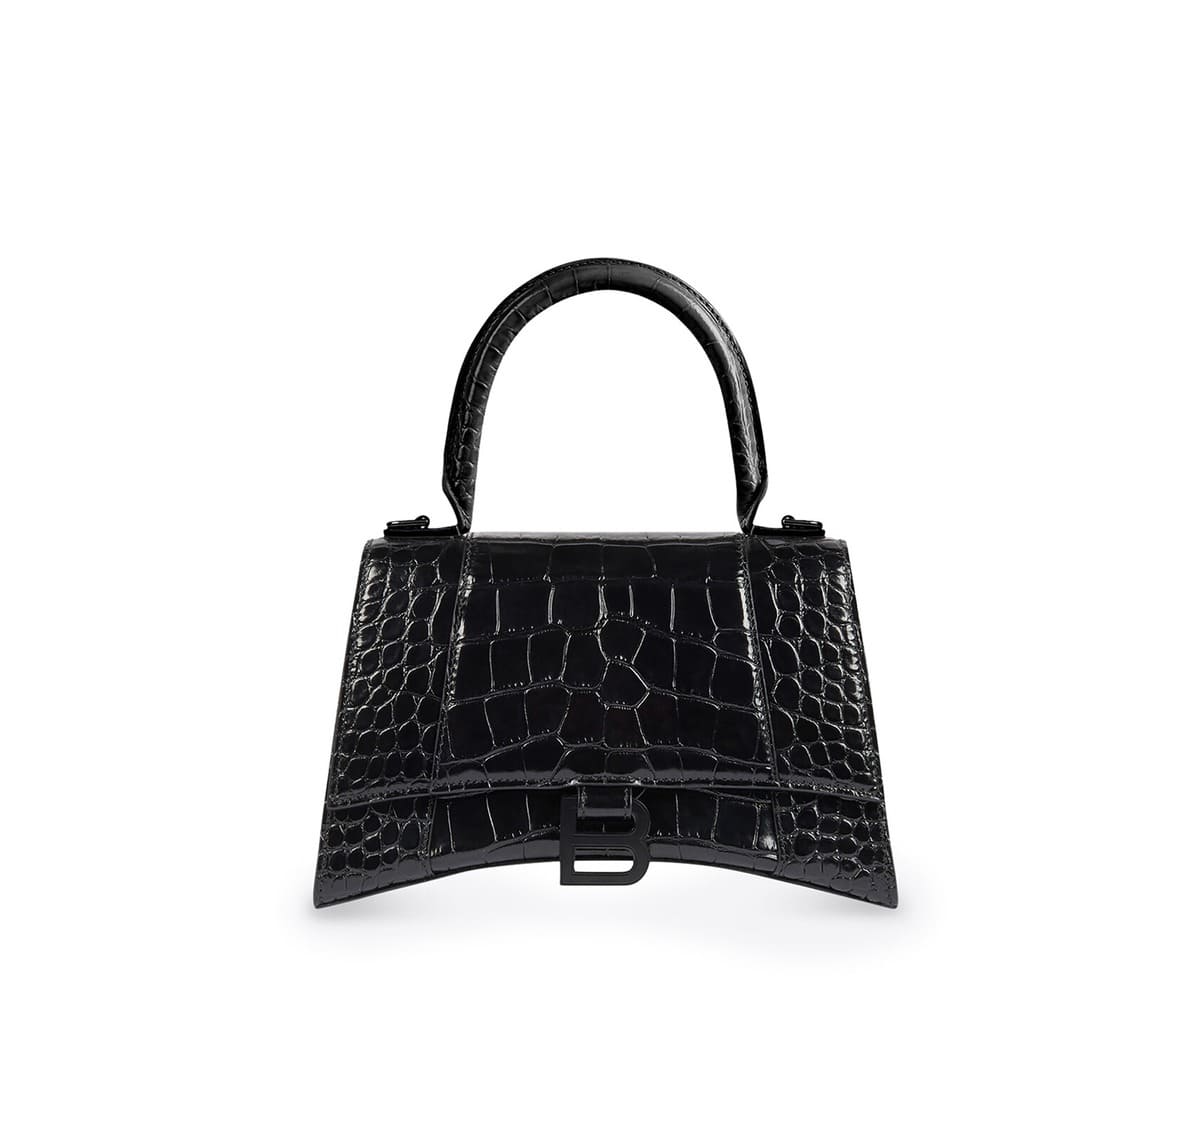 Balenciaga Hourglass XS Bag in Croc Embossed all black